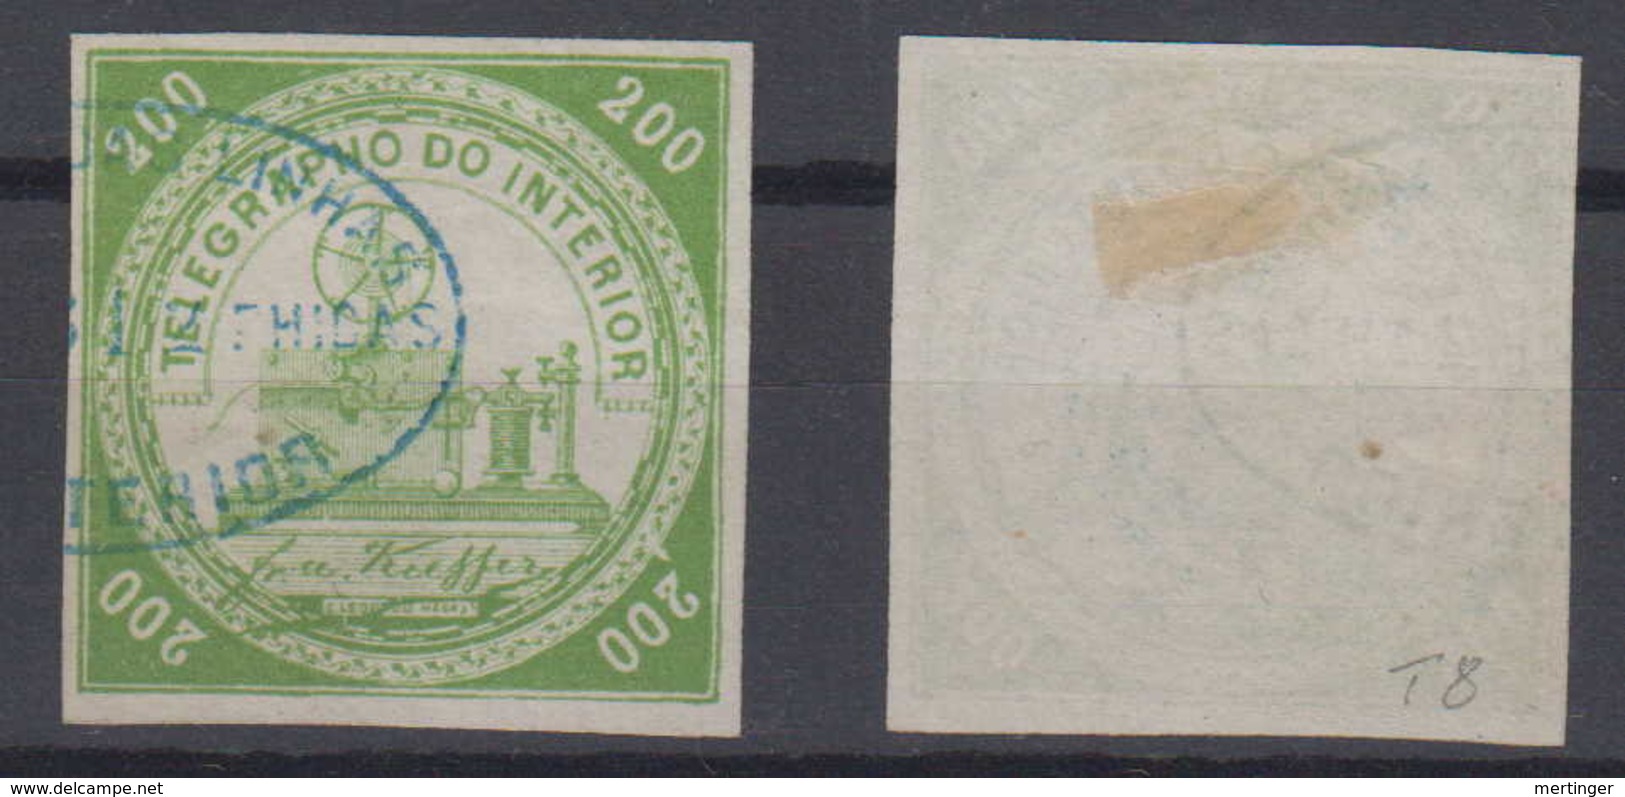 Brazil Brasil Telegrafo Telegraph 1869 200R Used Kiefer Good Margins - Telegrafo